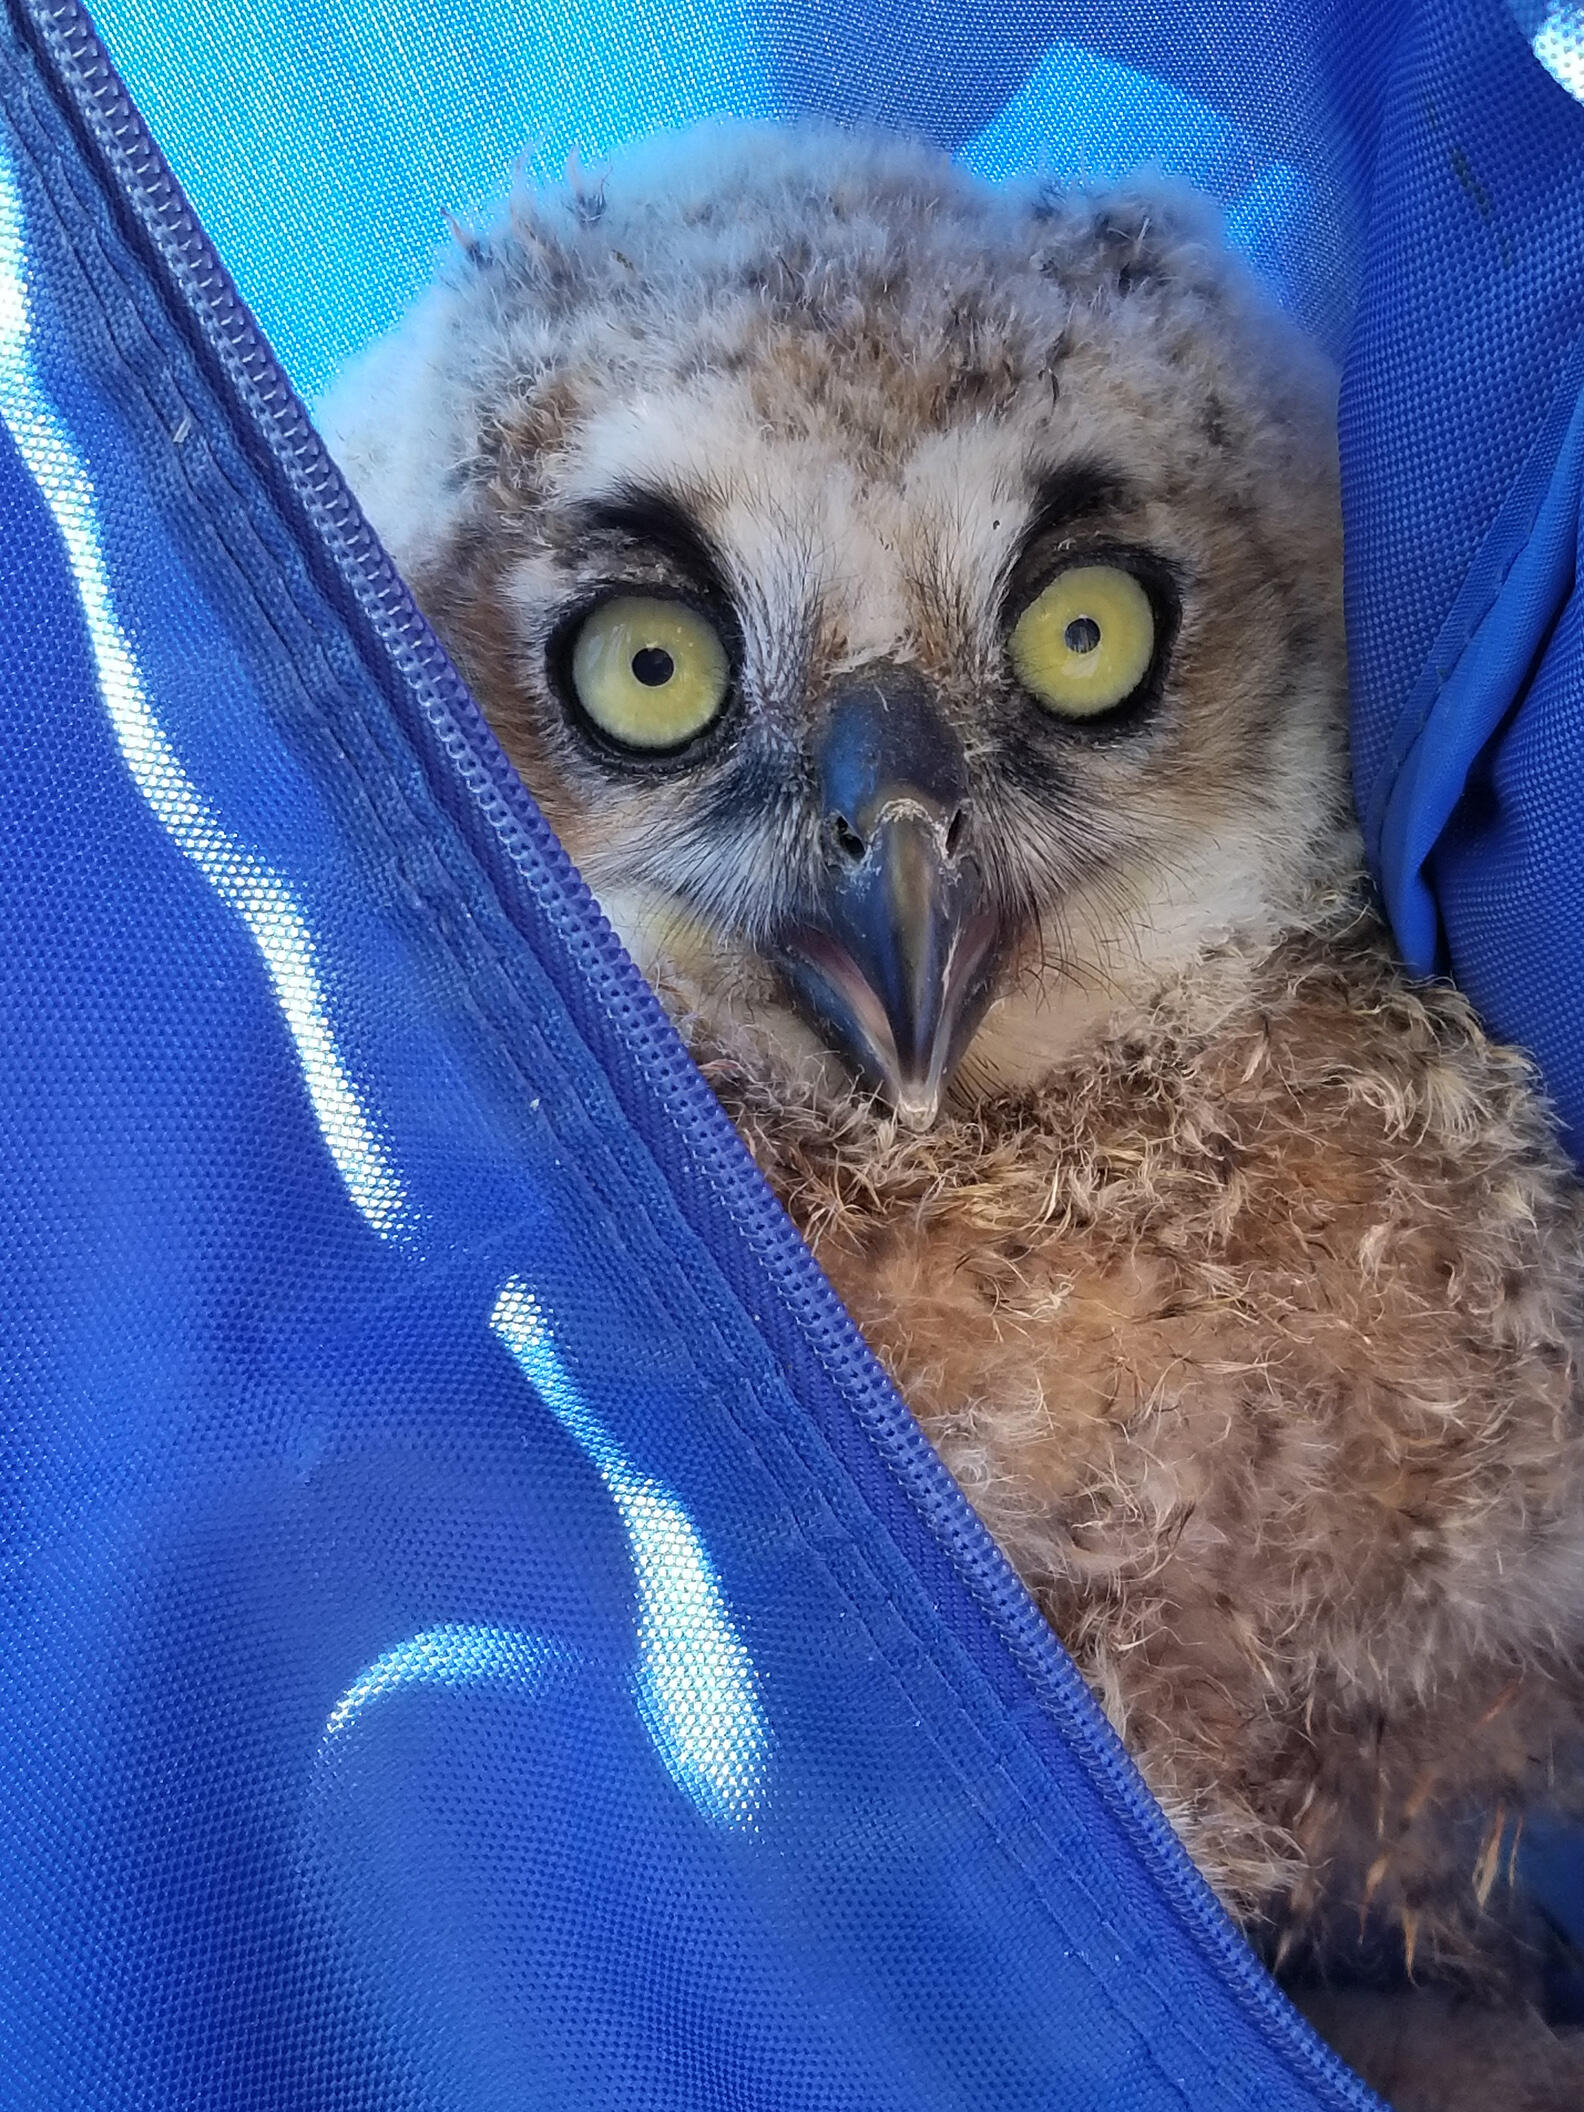 bird with big eyes in a blue bag